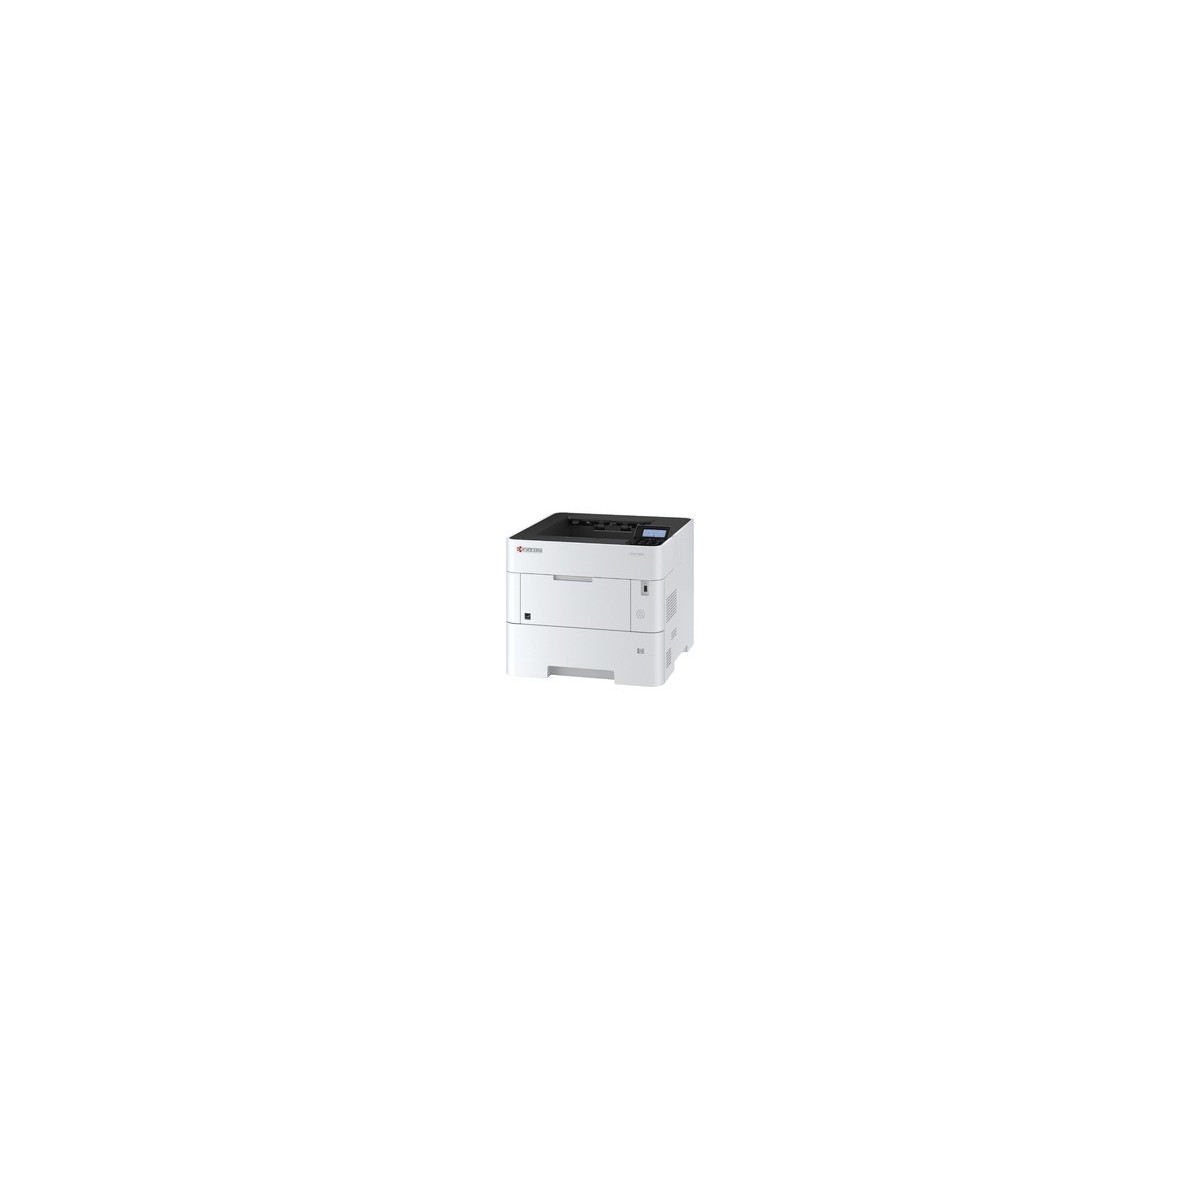 Kyocera ECOSYS P3150dn/KL3 - Laser - 1200 x 1200 DPI - A4 - 50 ppm - Duplex printing - Black - White